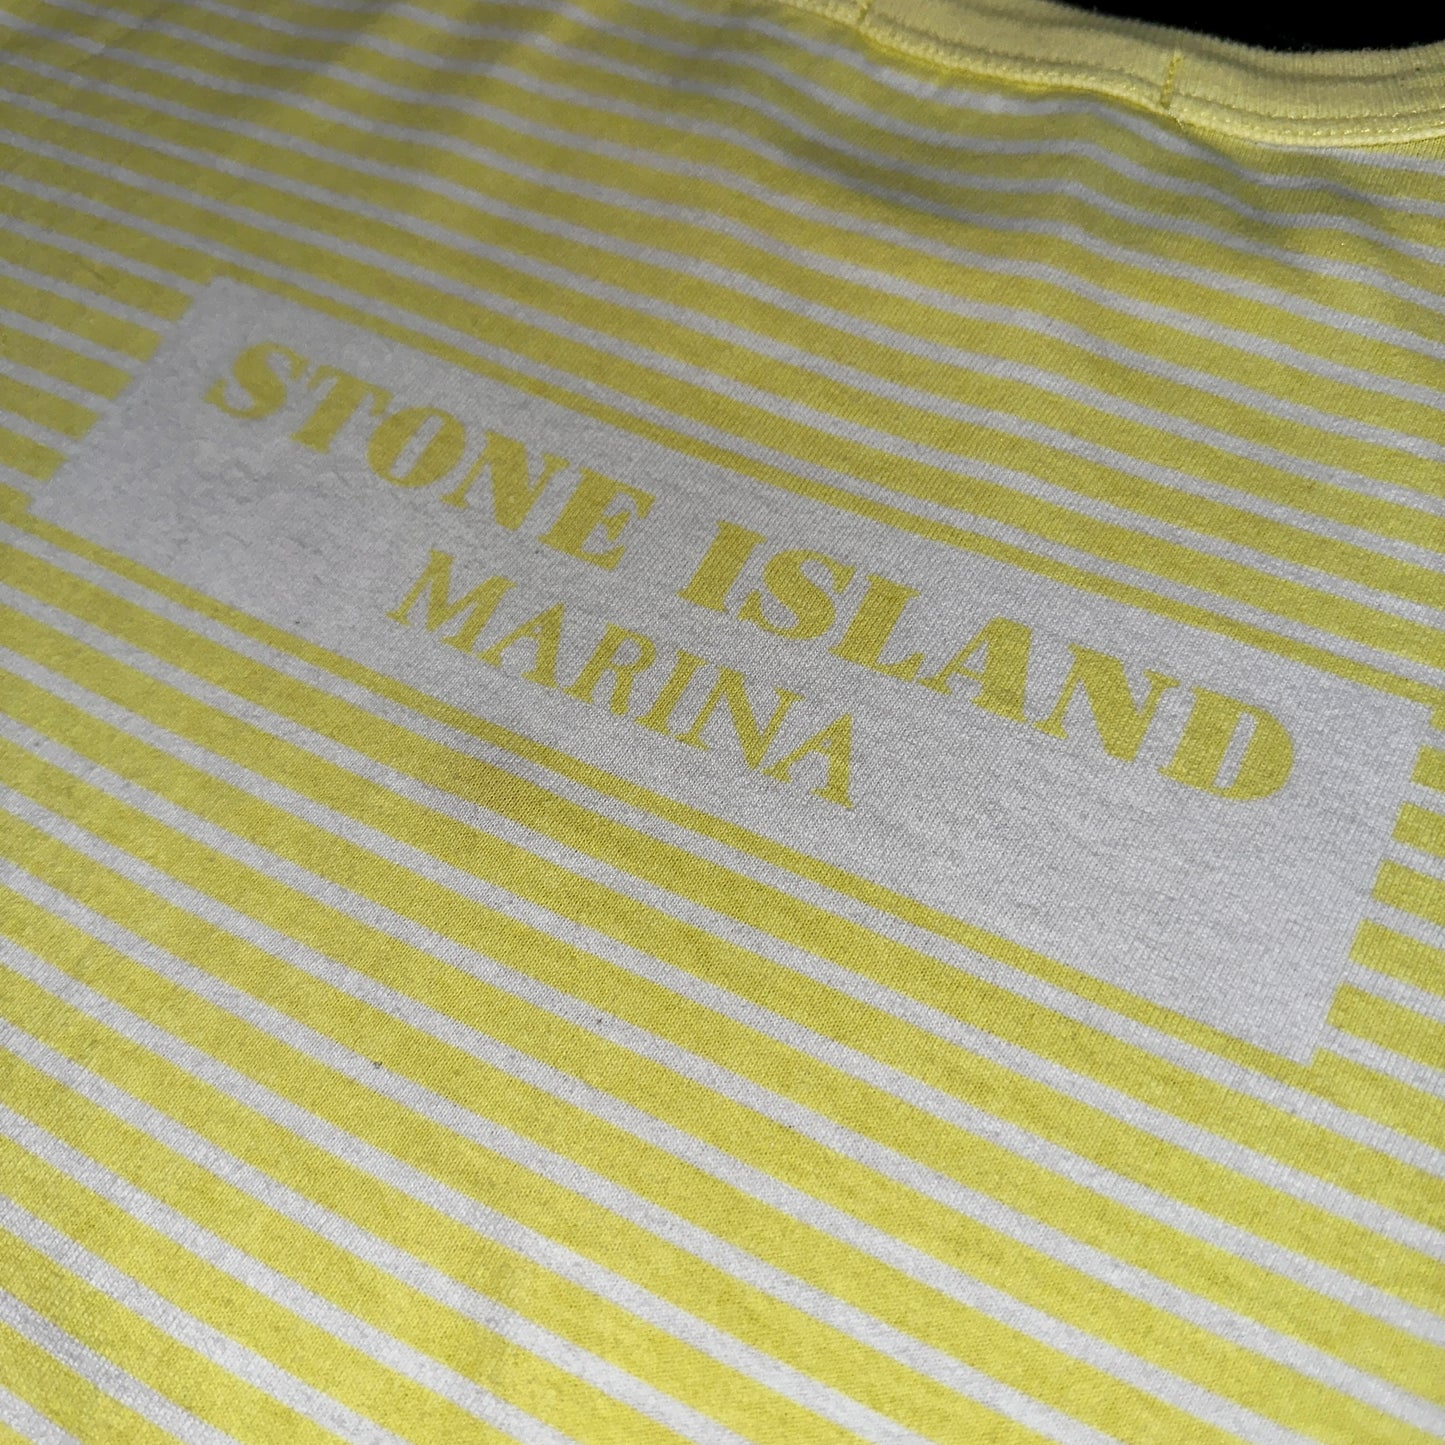 Stone Island Marina T-Shirt 2018 - S